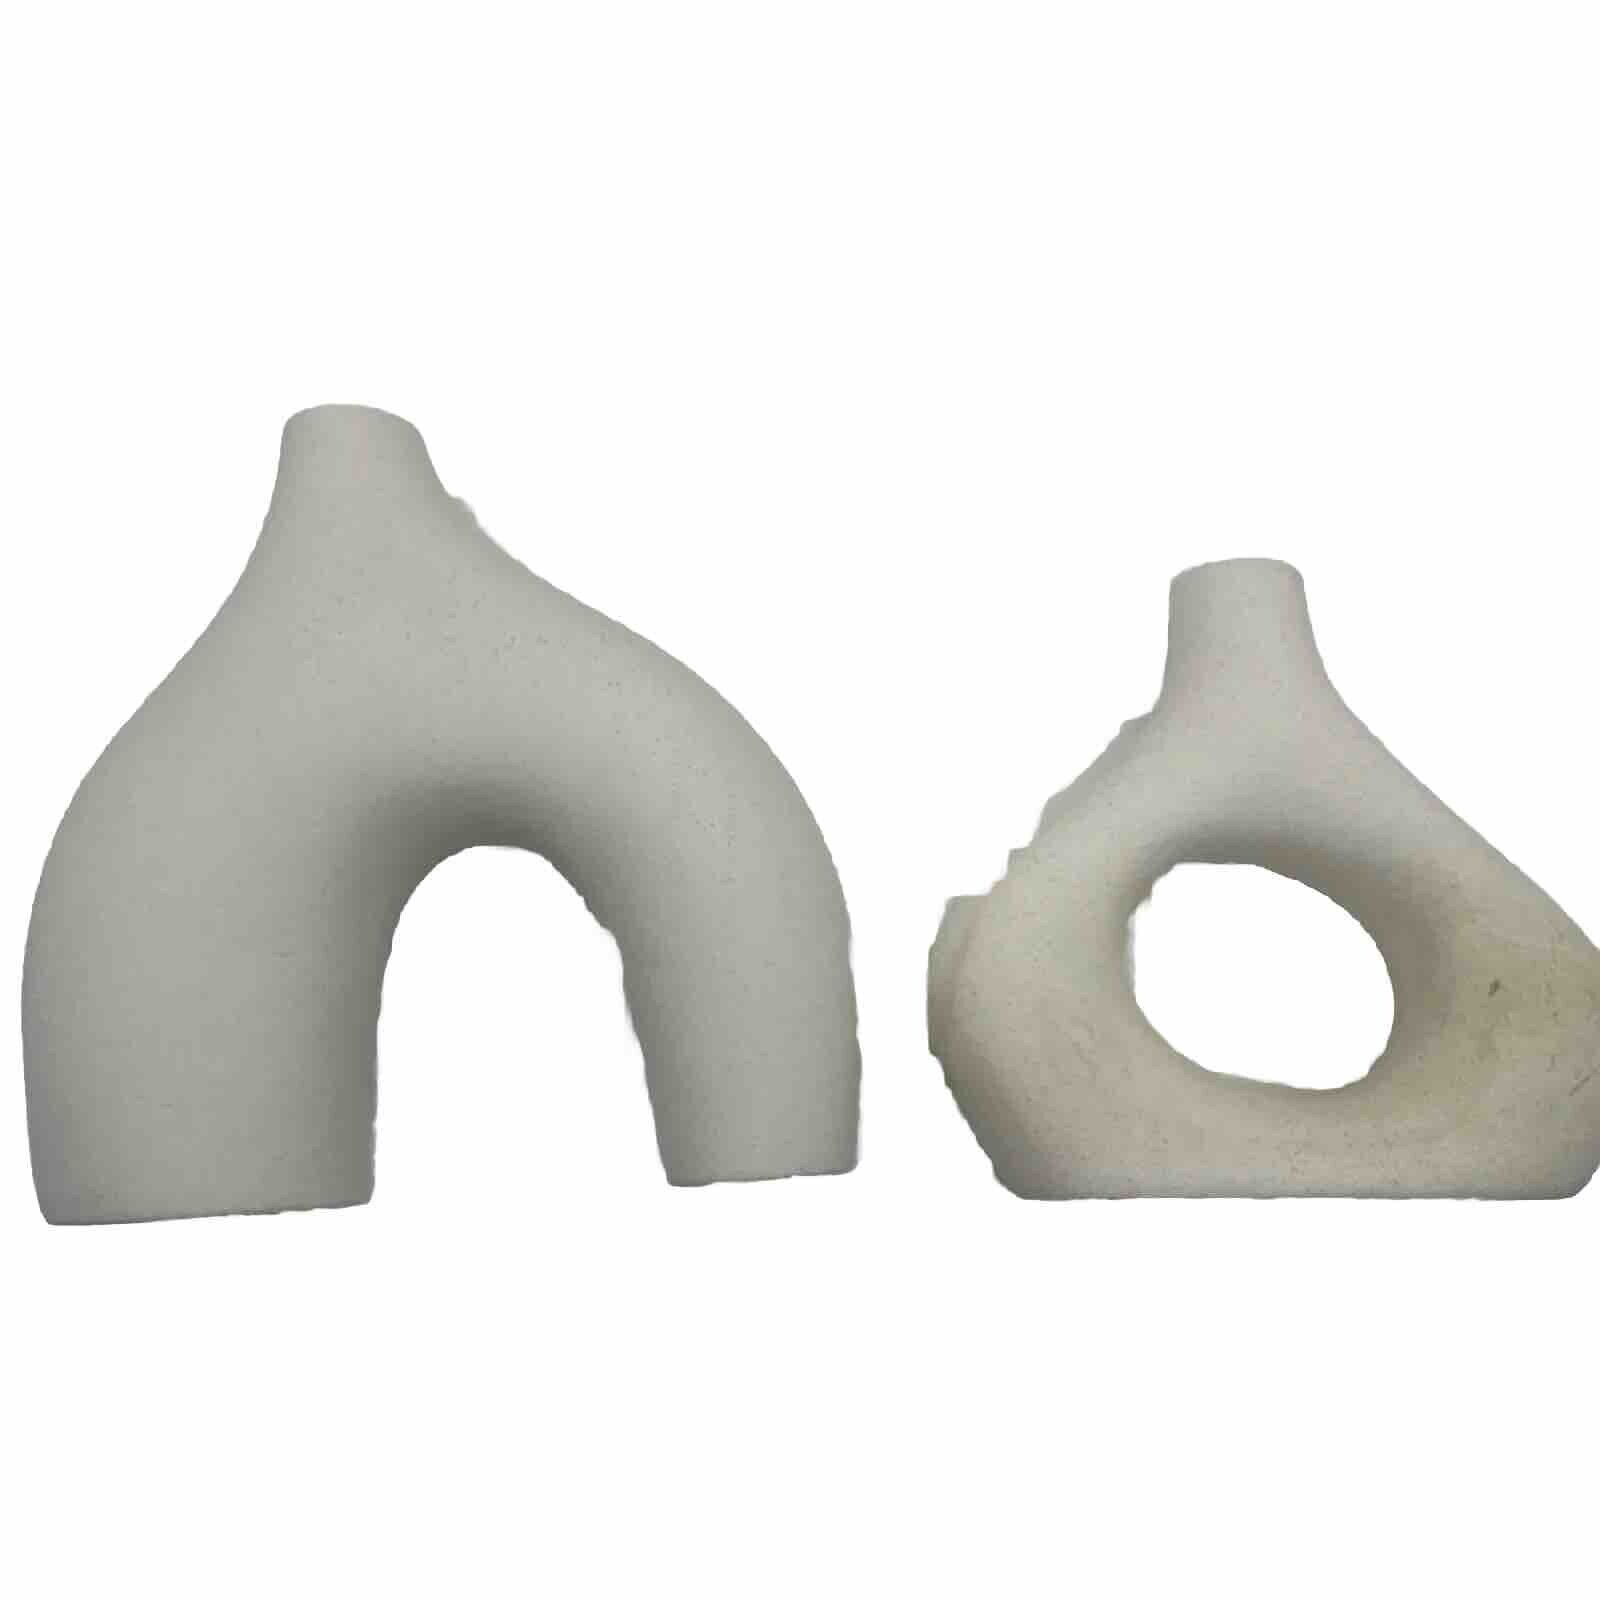 Two beautiful white stone looking vases Interlocking (EE)